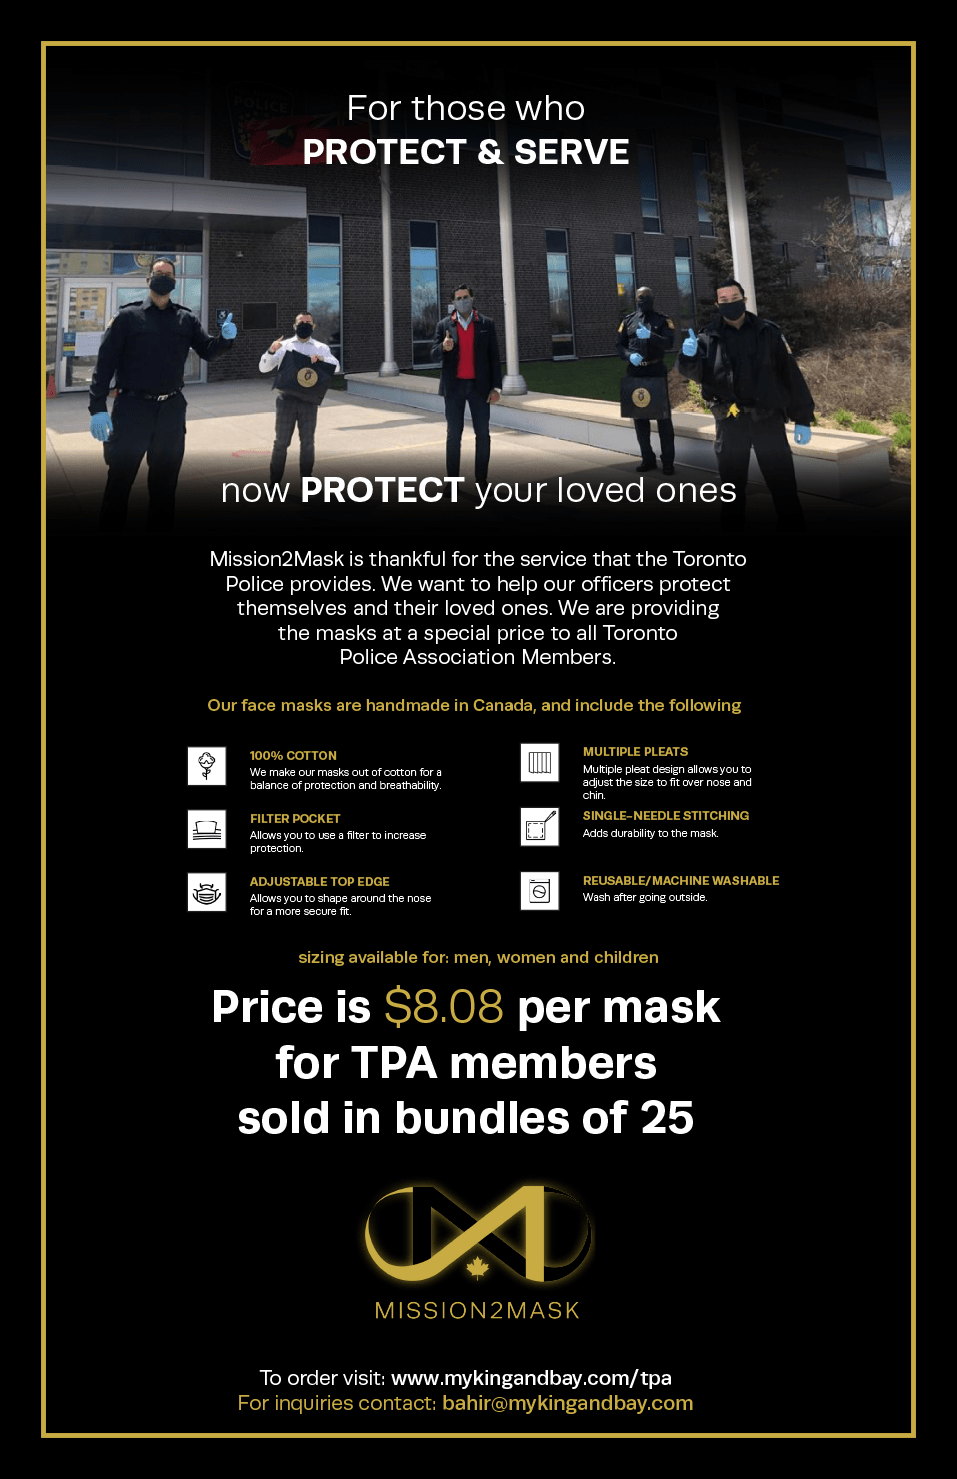 Mission2Mask Face Masks for the TPA